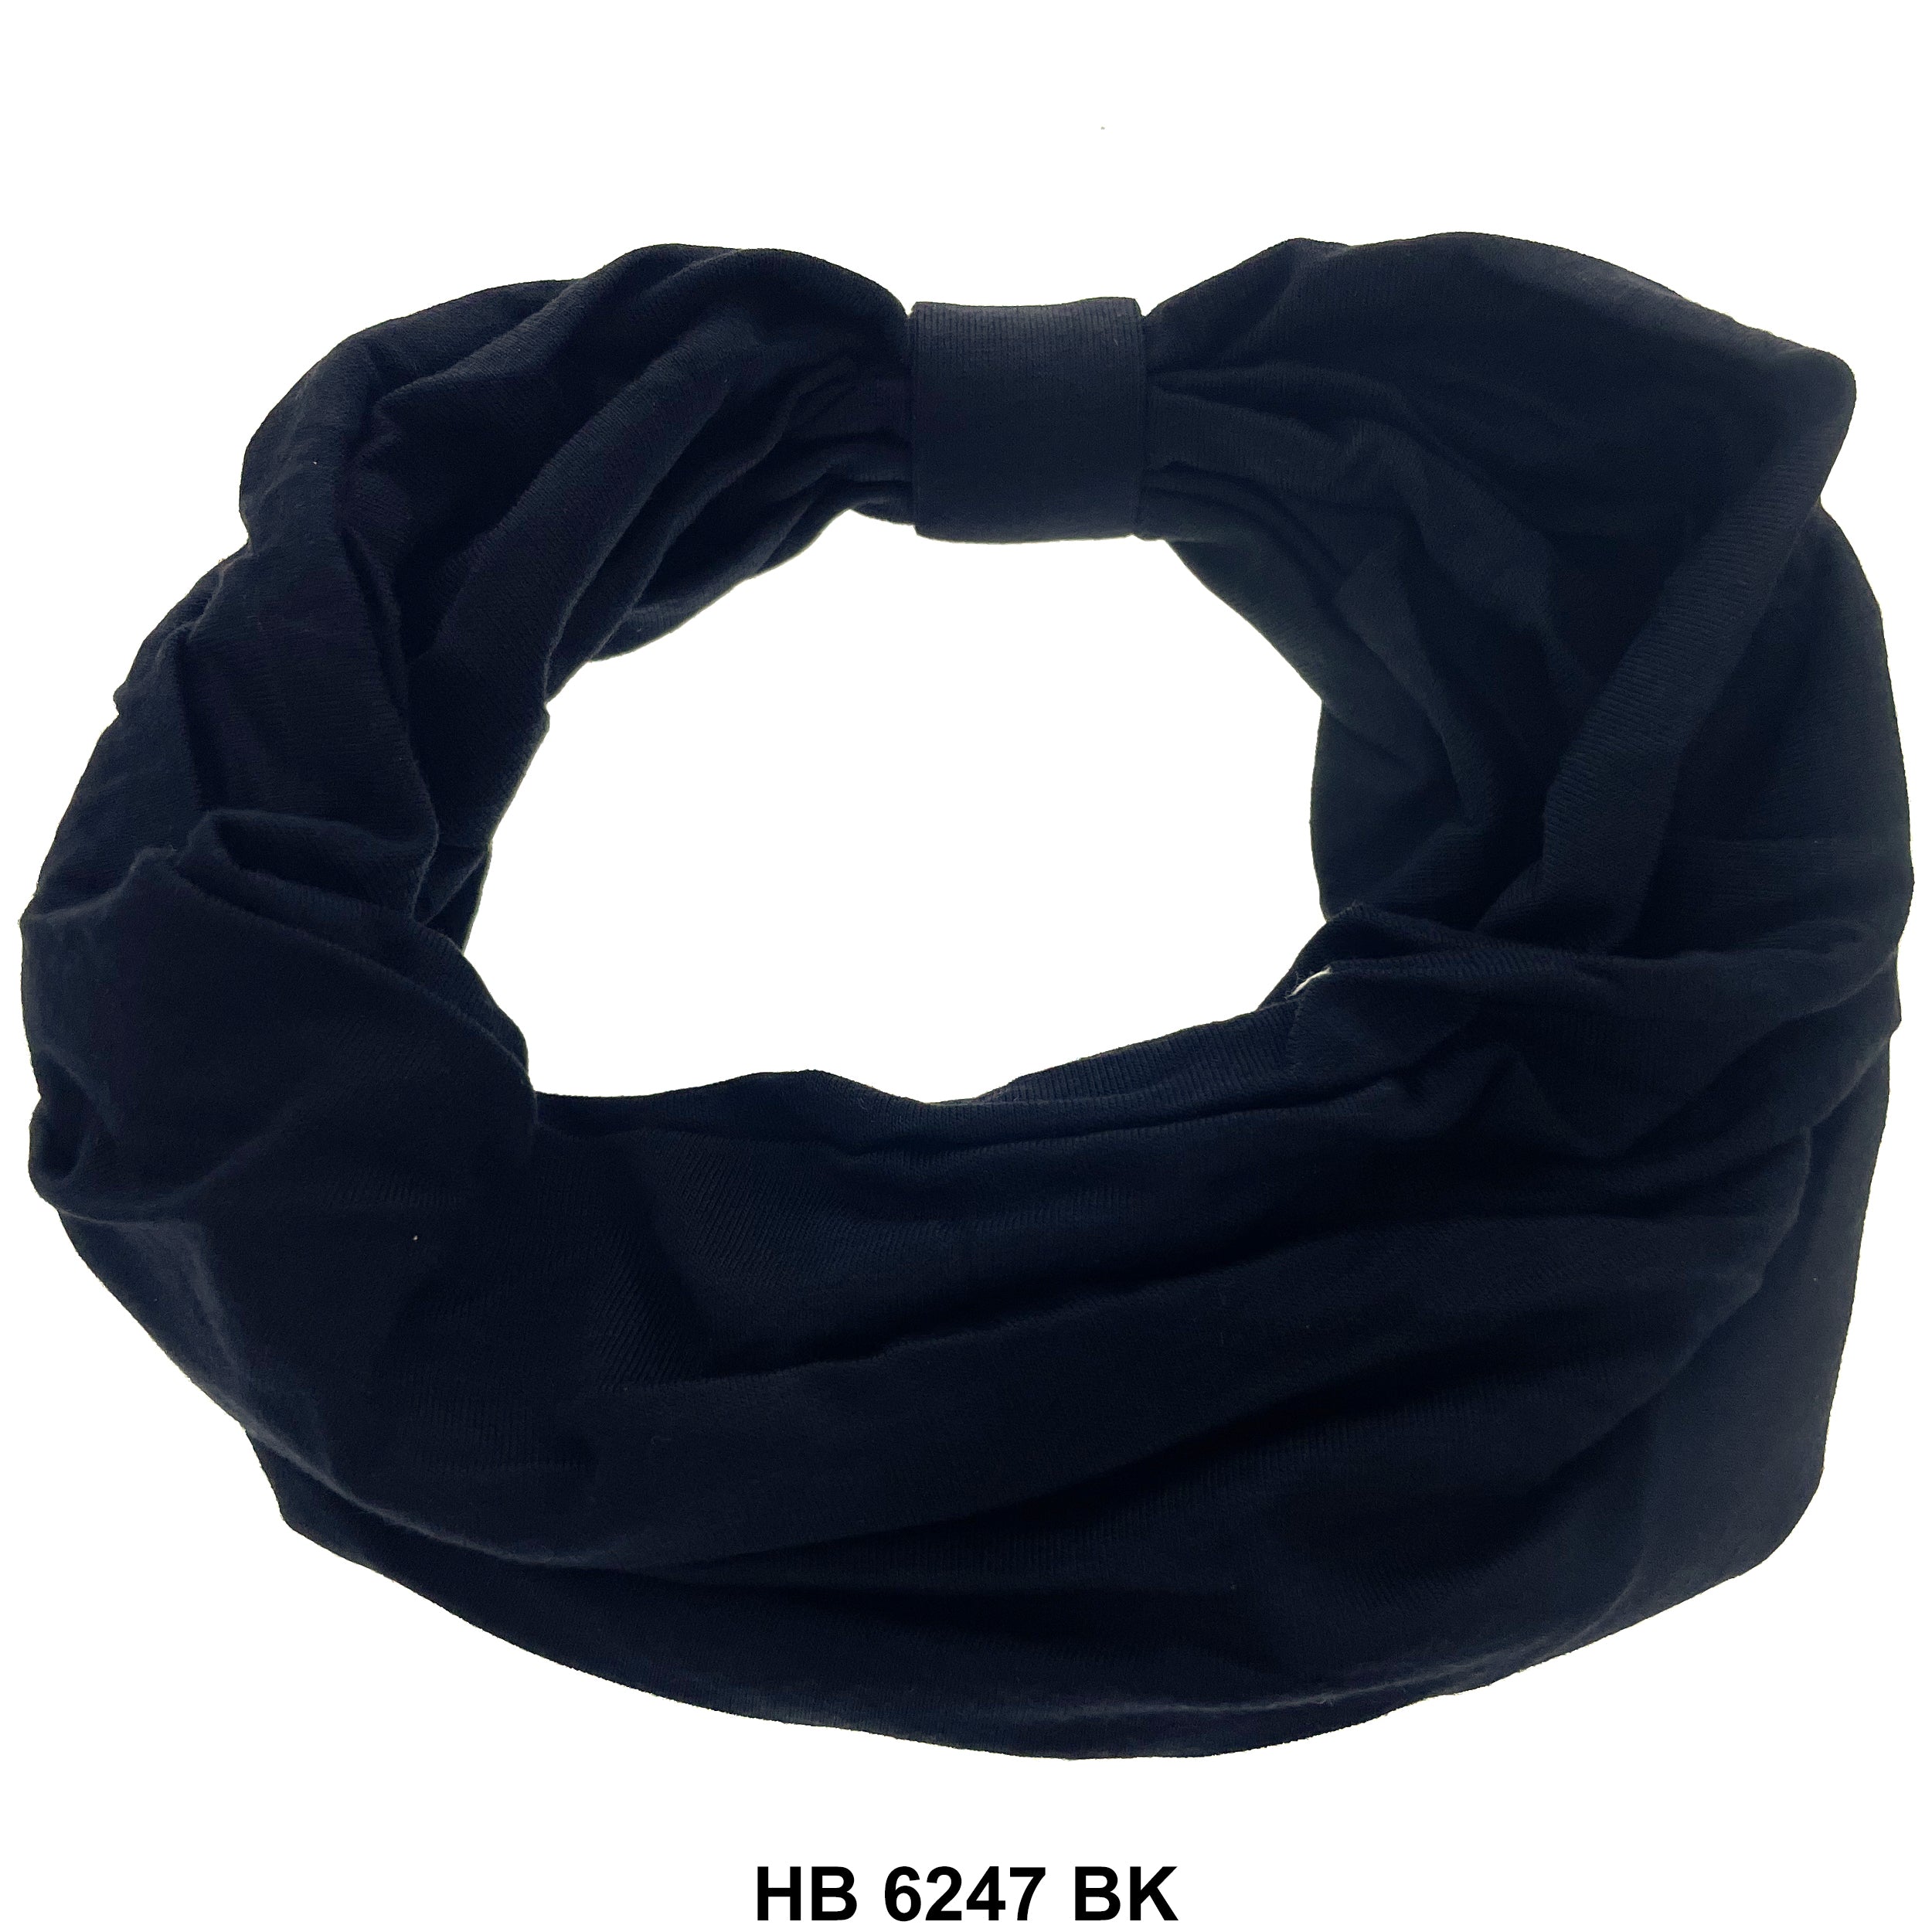 Fashion Headbands HB 6247 BK